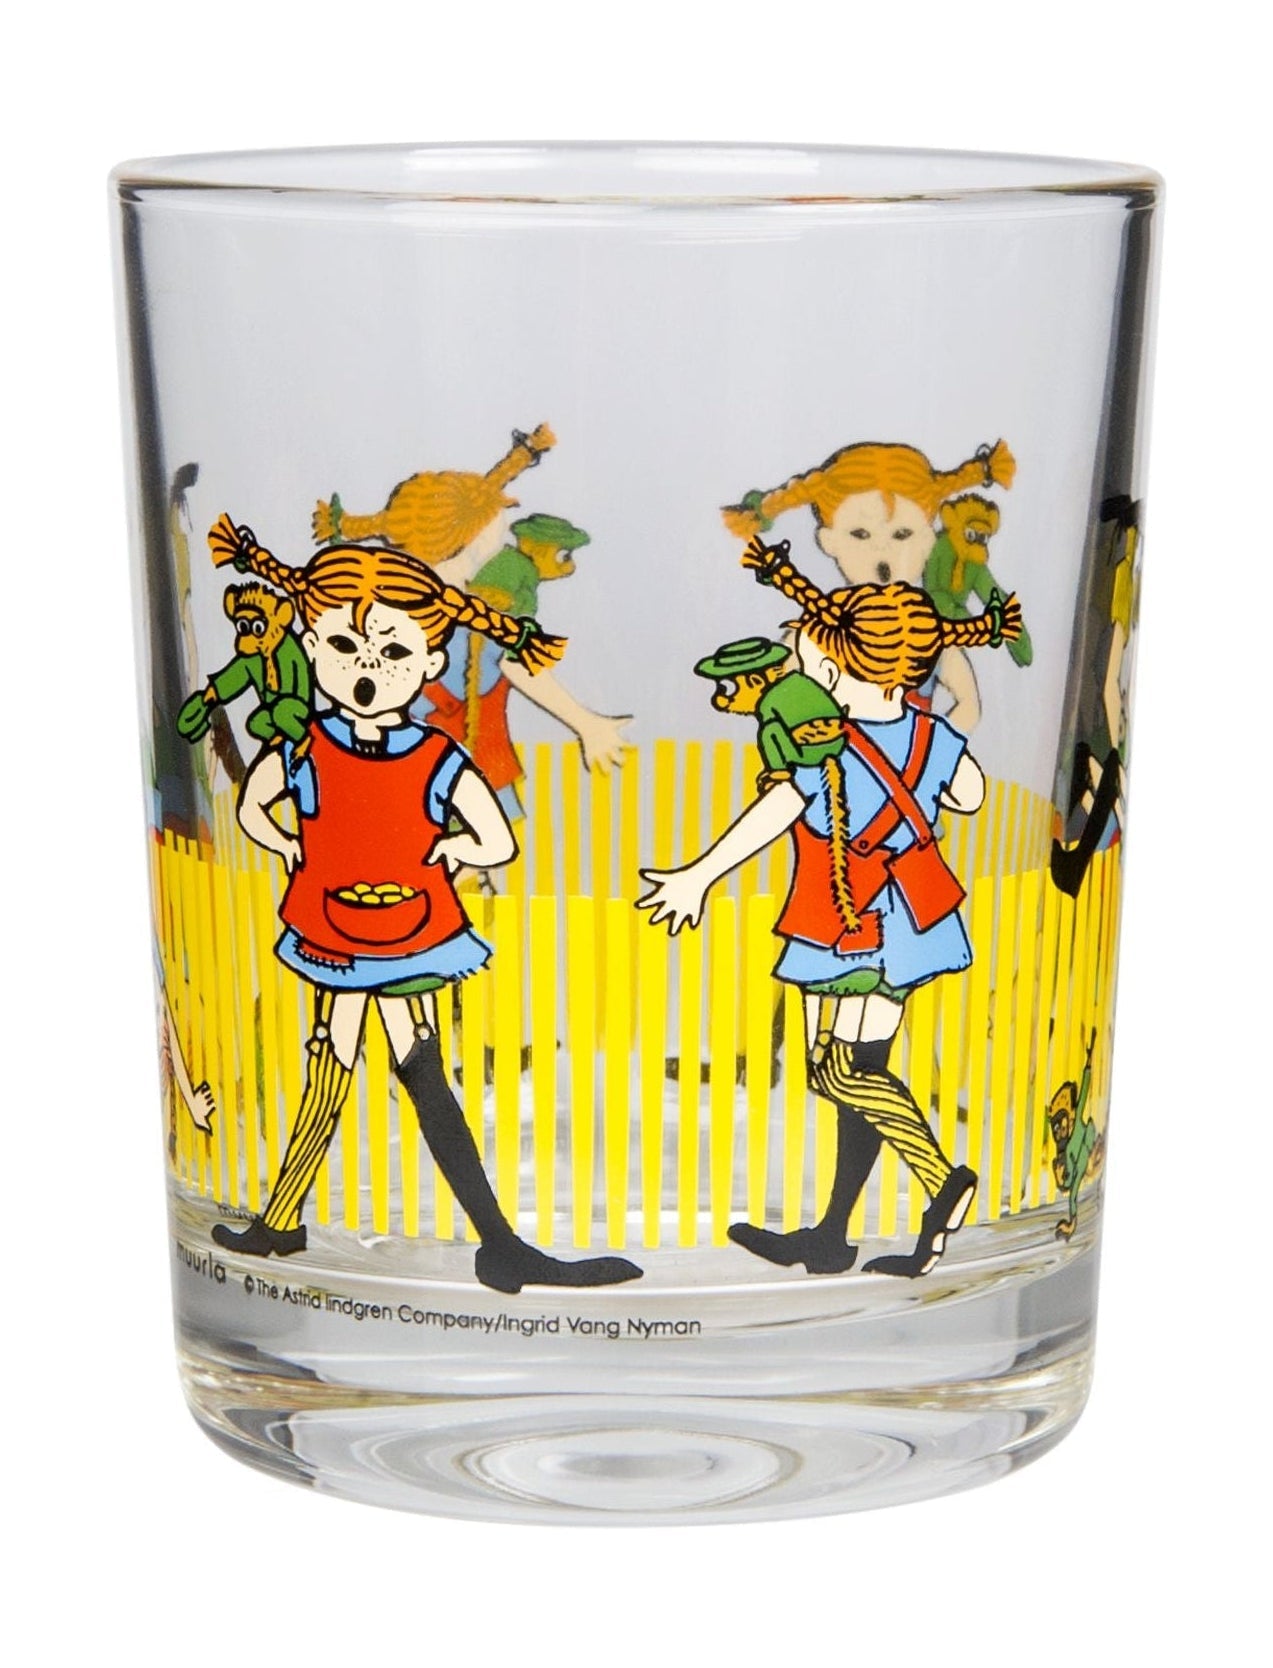 Muurla Pippi Longstocking Drinking Glass, Pippi Longstocking